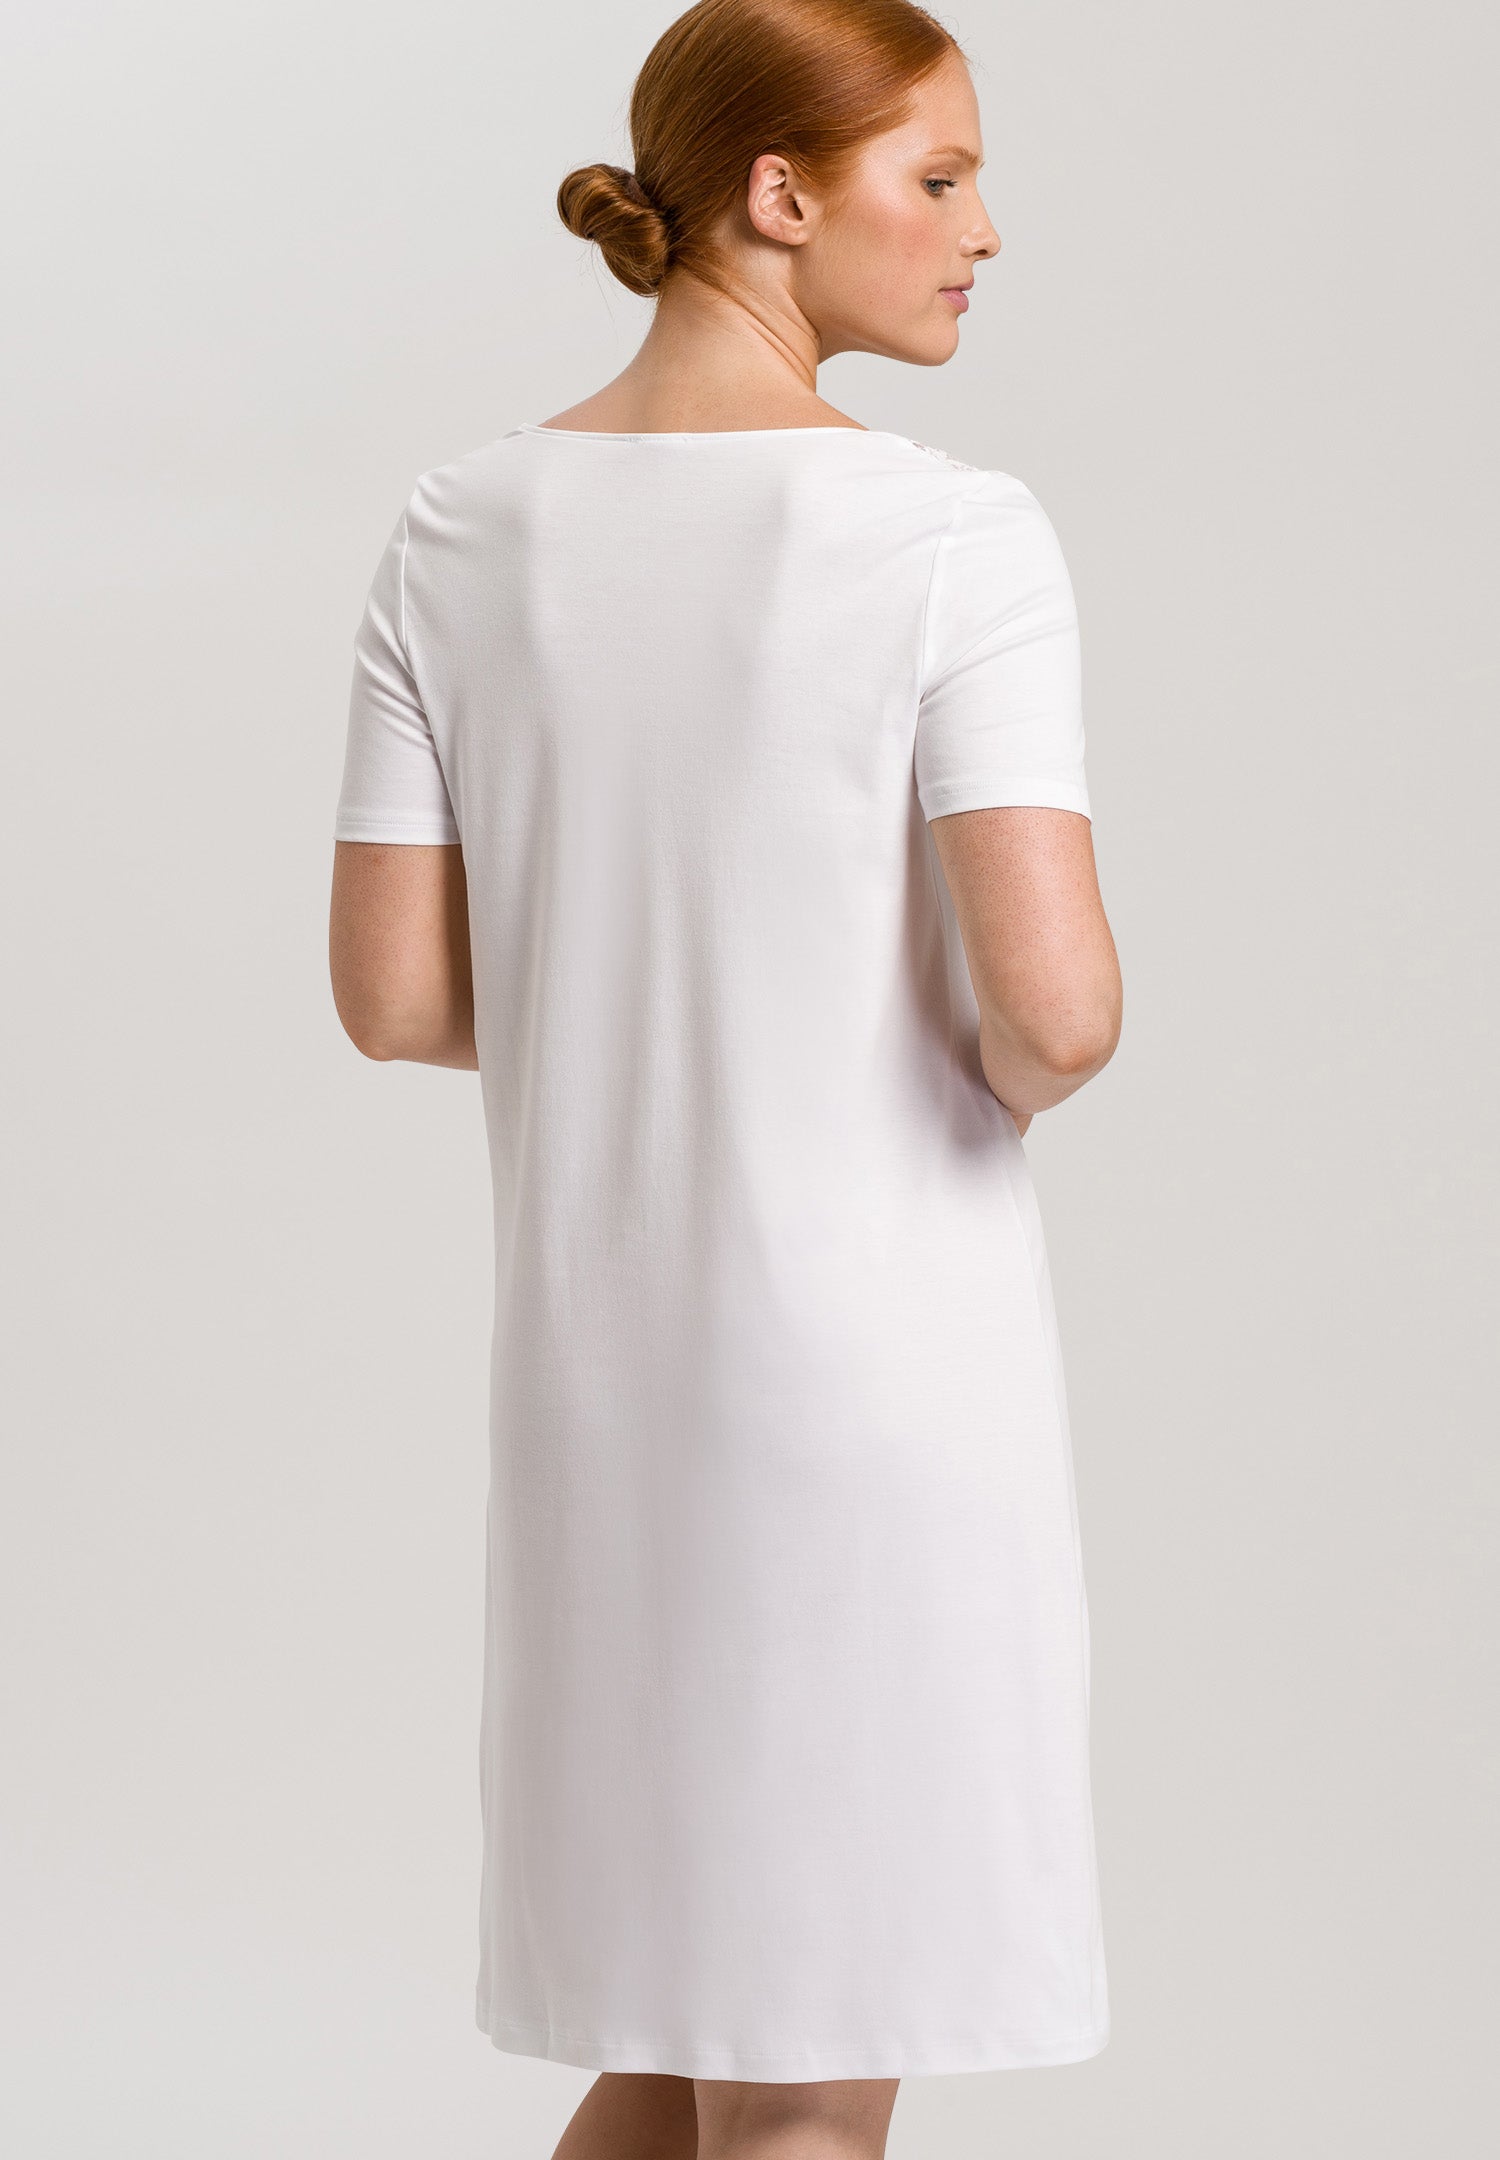 77930 Moments Short Sleeve Nightdress 100cm - 101 White